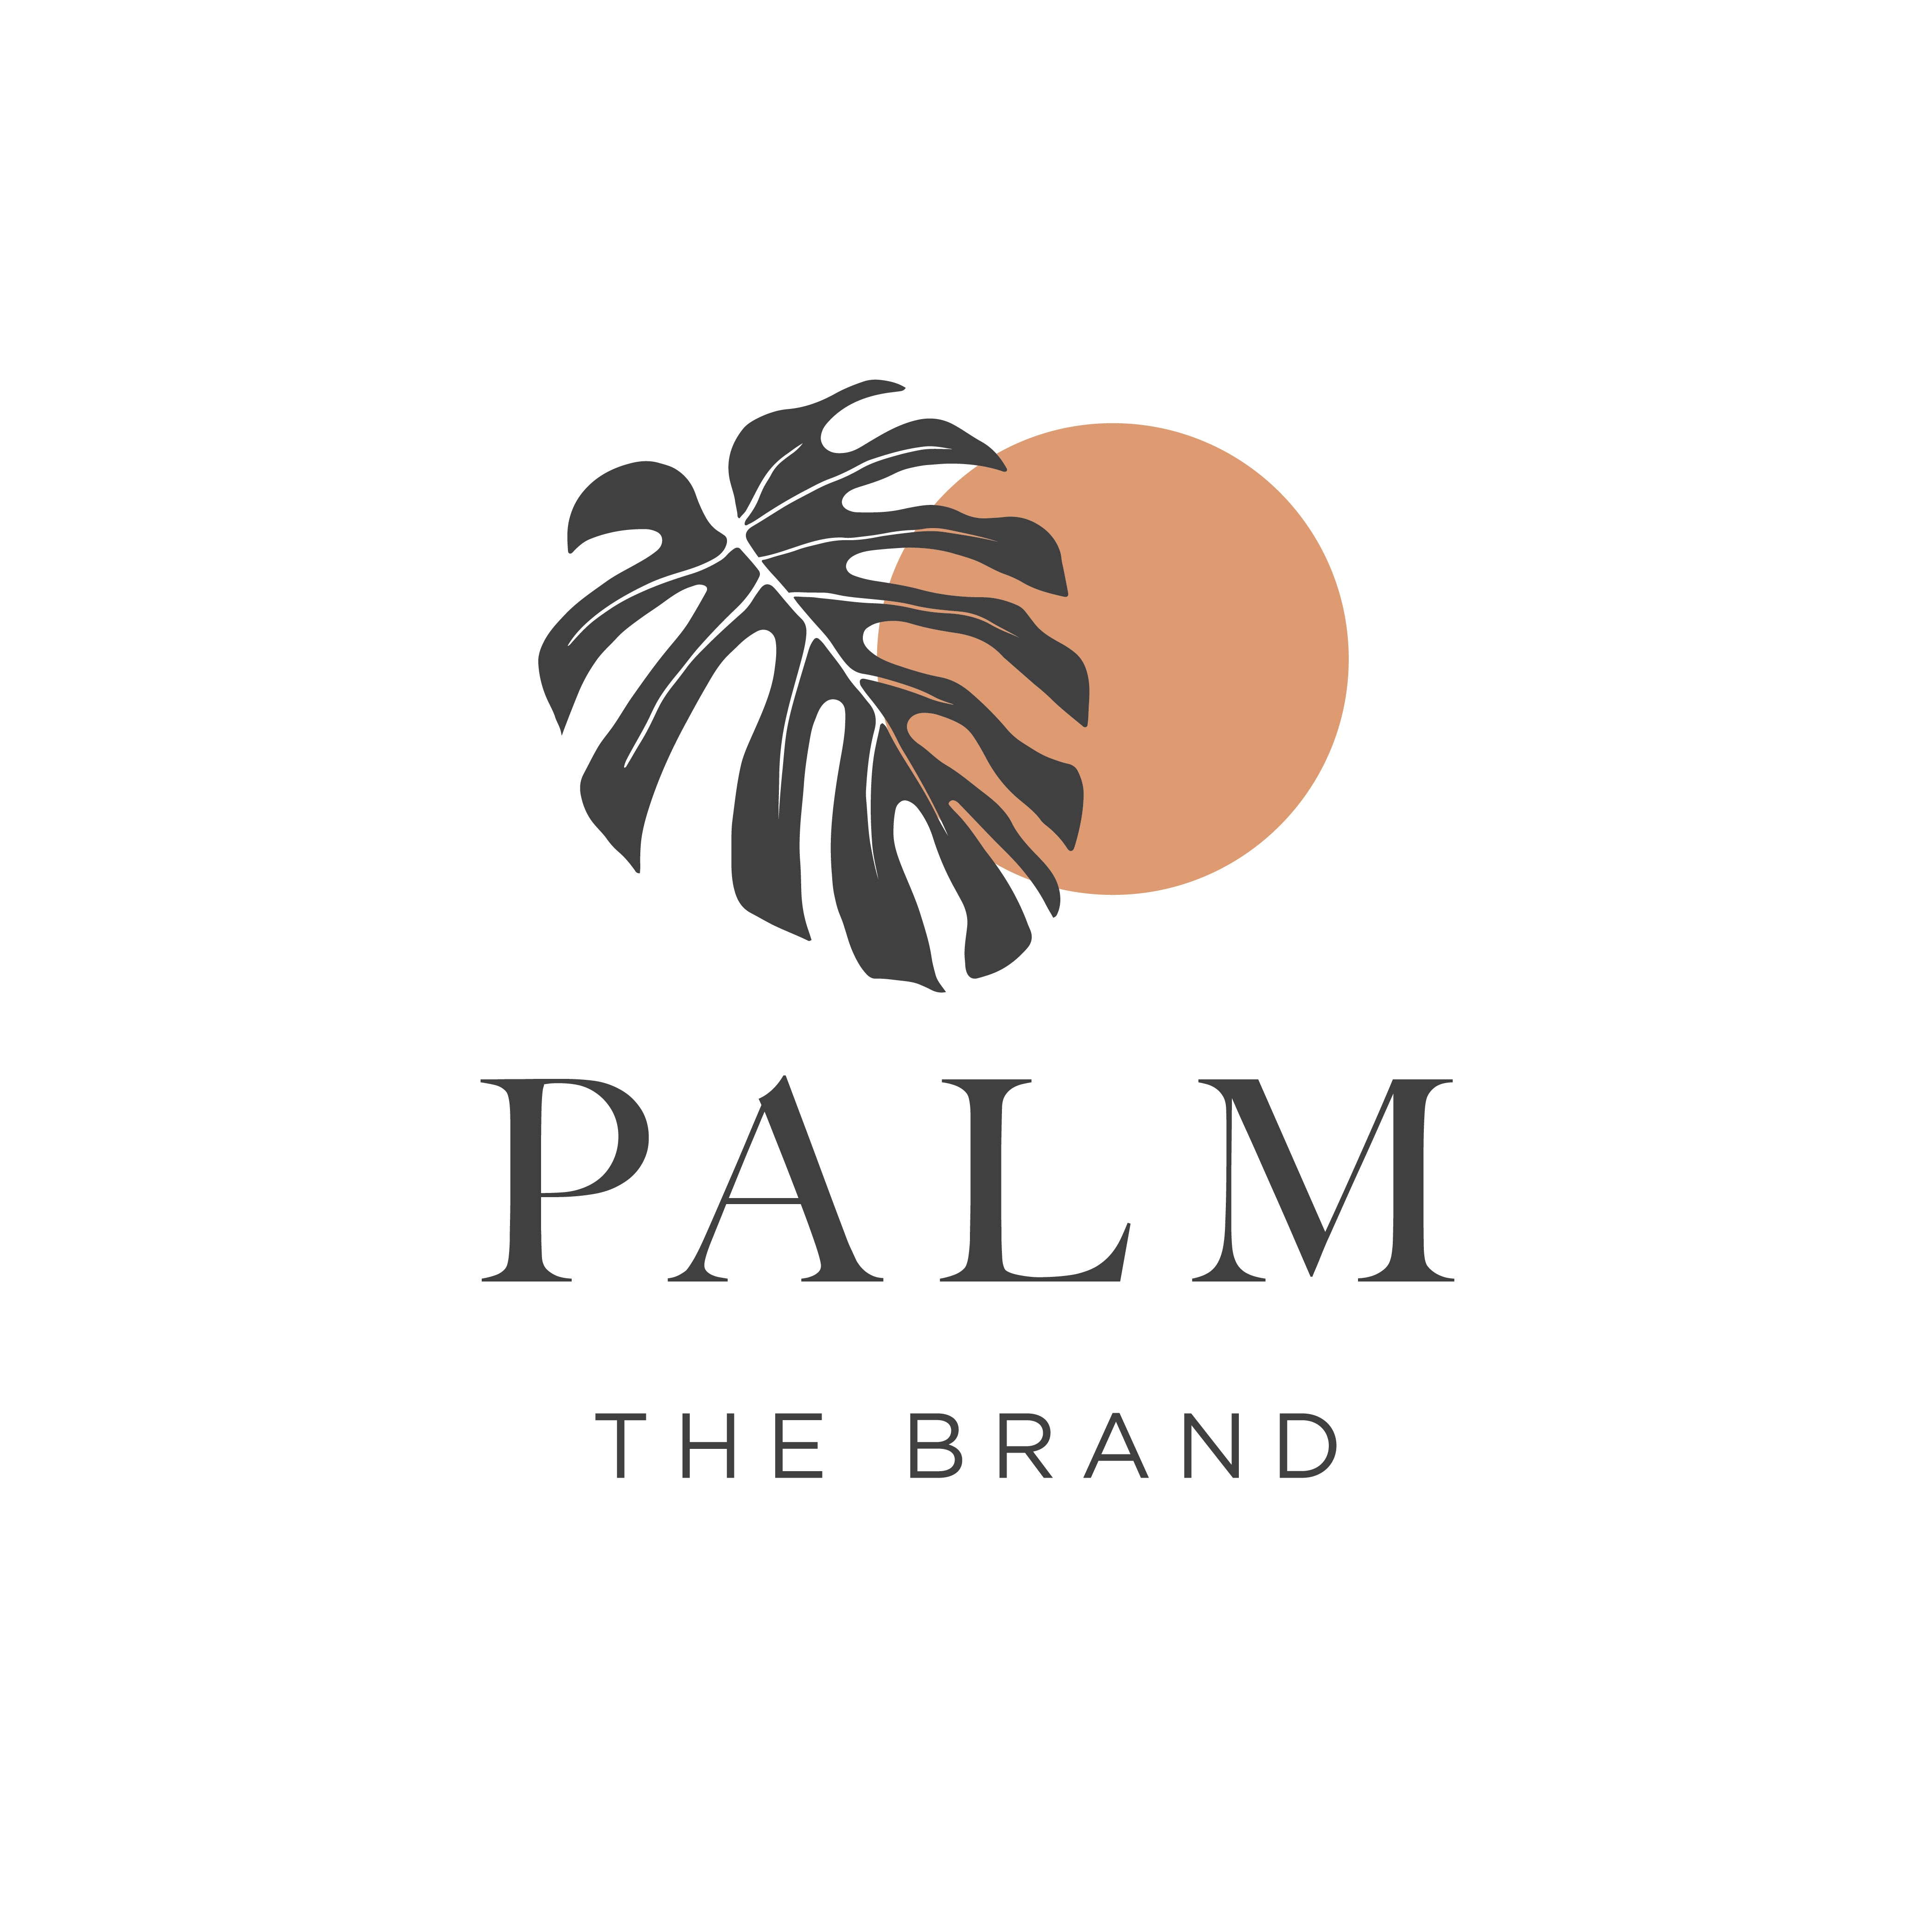 Palm The Brand – Palm the brand